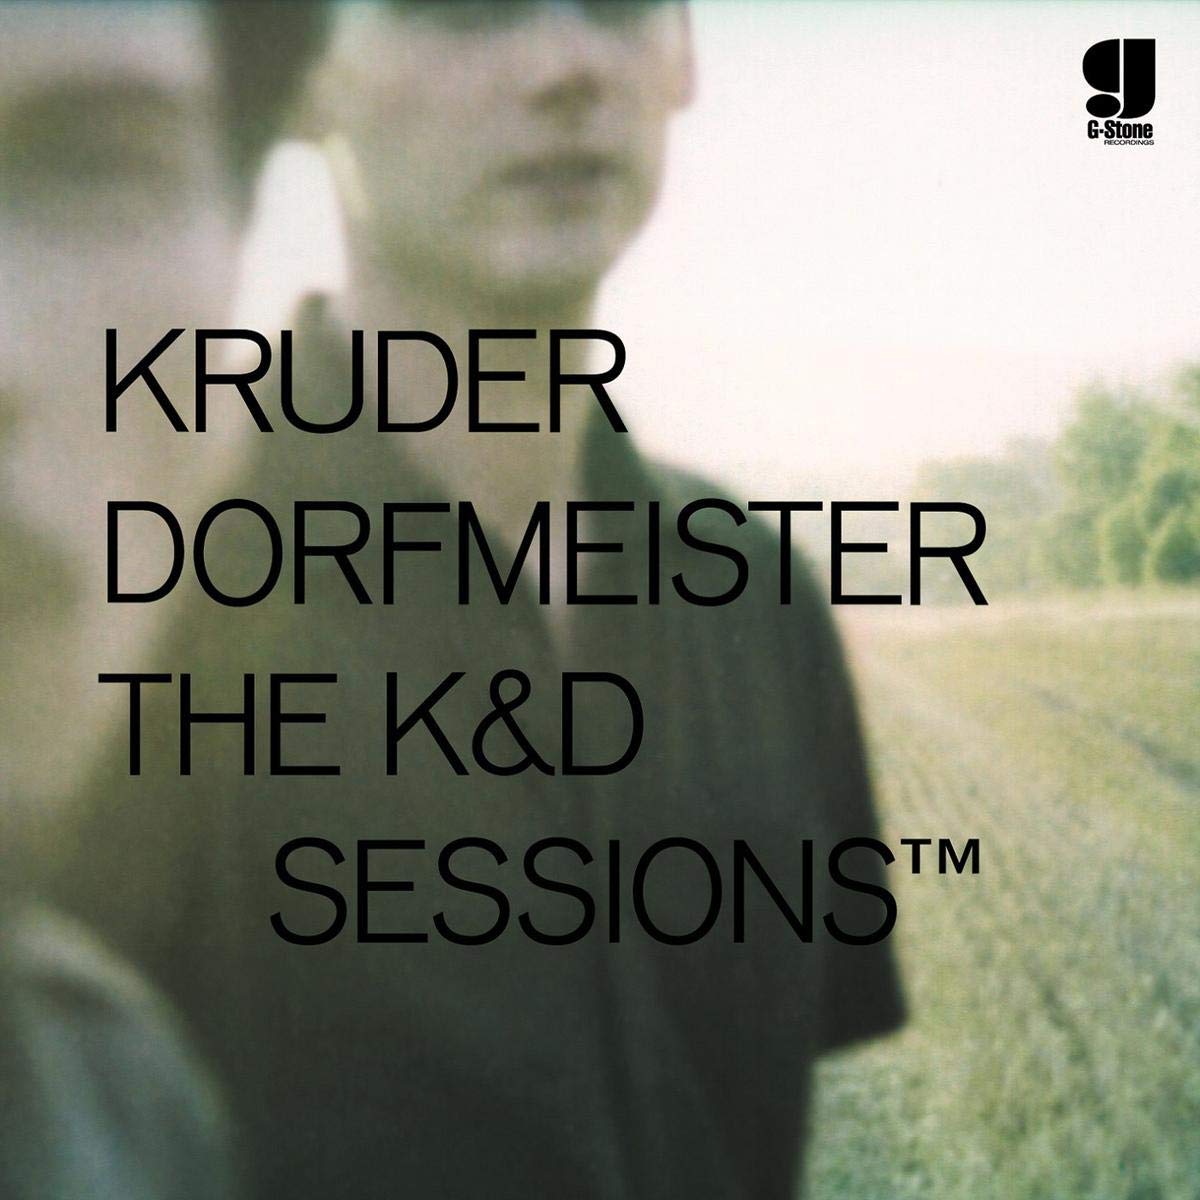 Kruder & Dorfmeister - The K&D Sessions LP vinil - Salvaje Music Store MEXICO